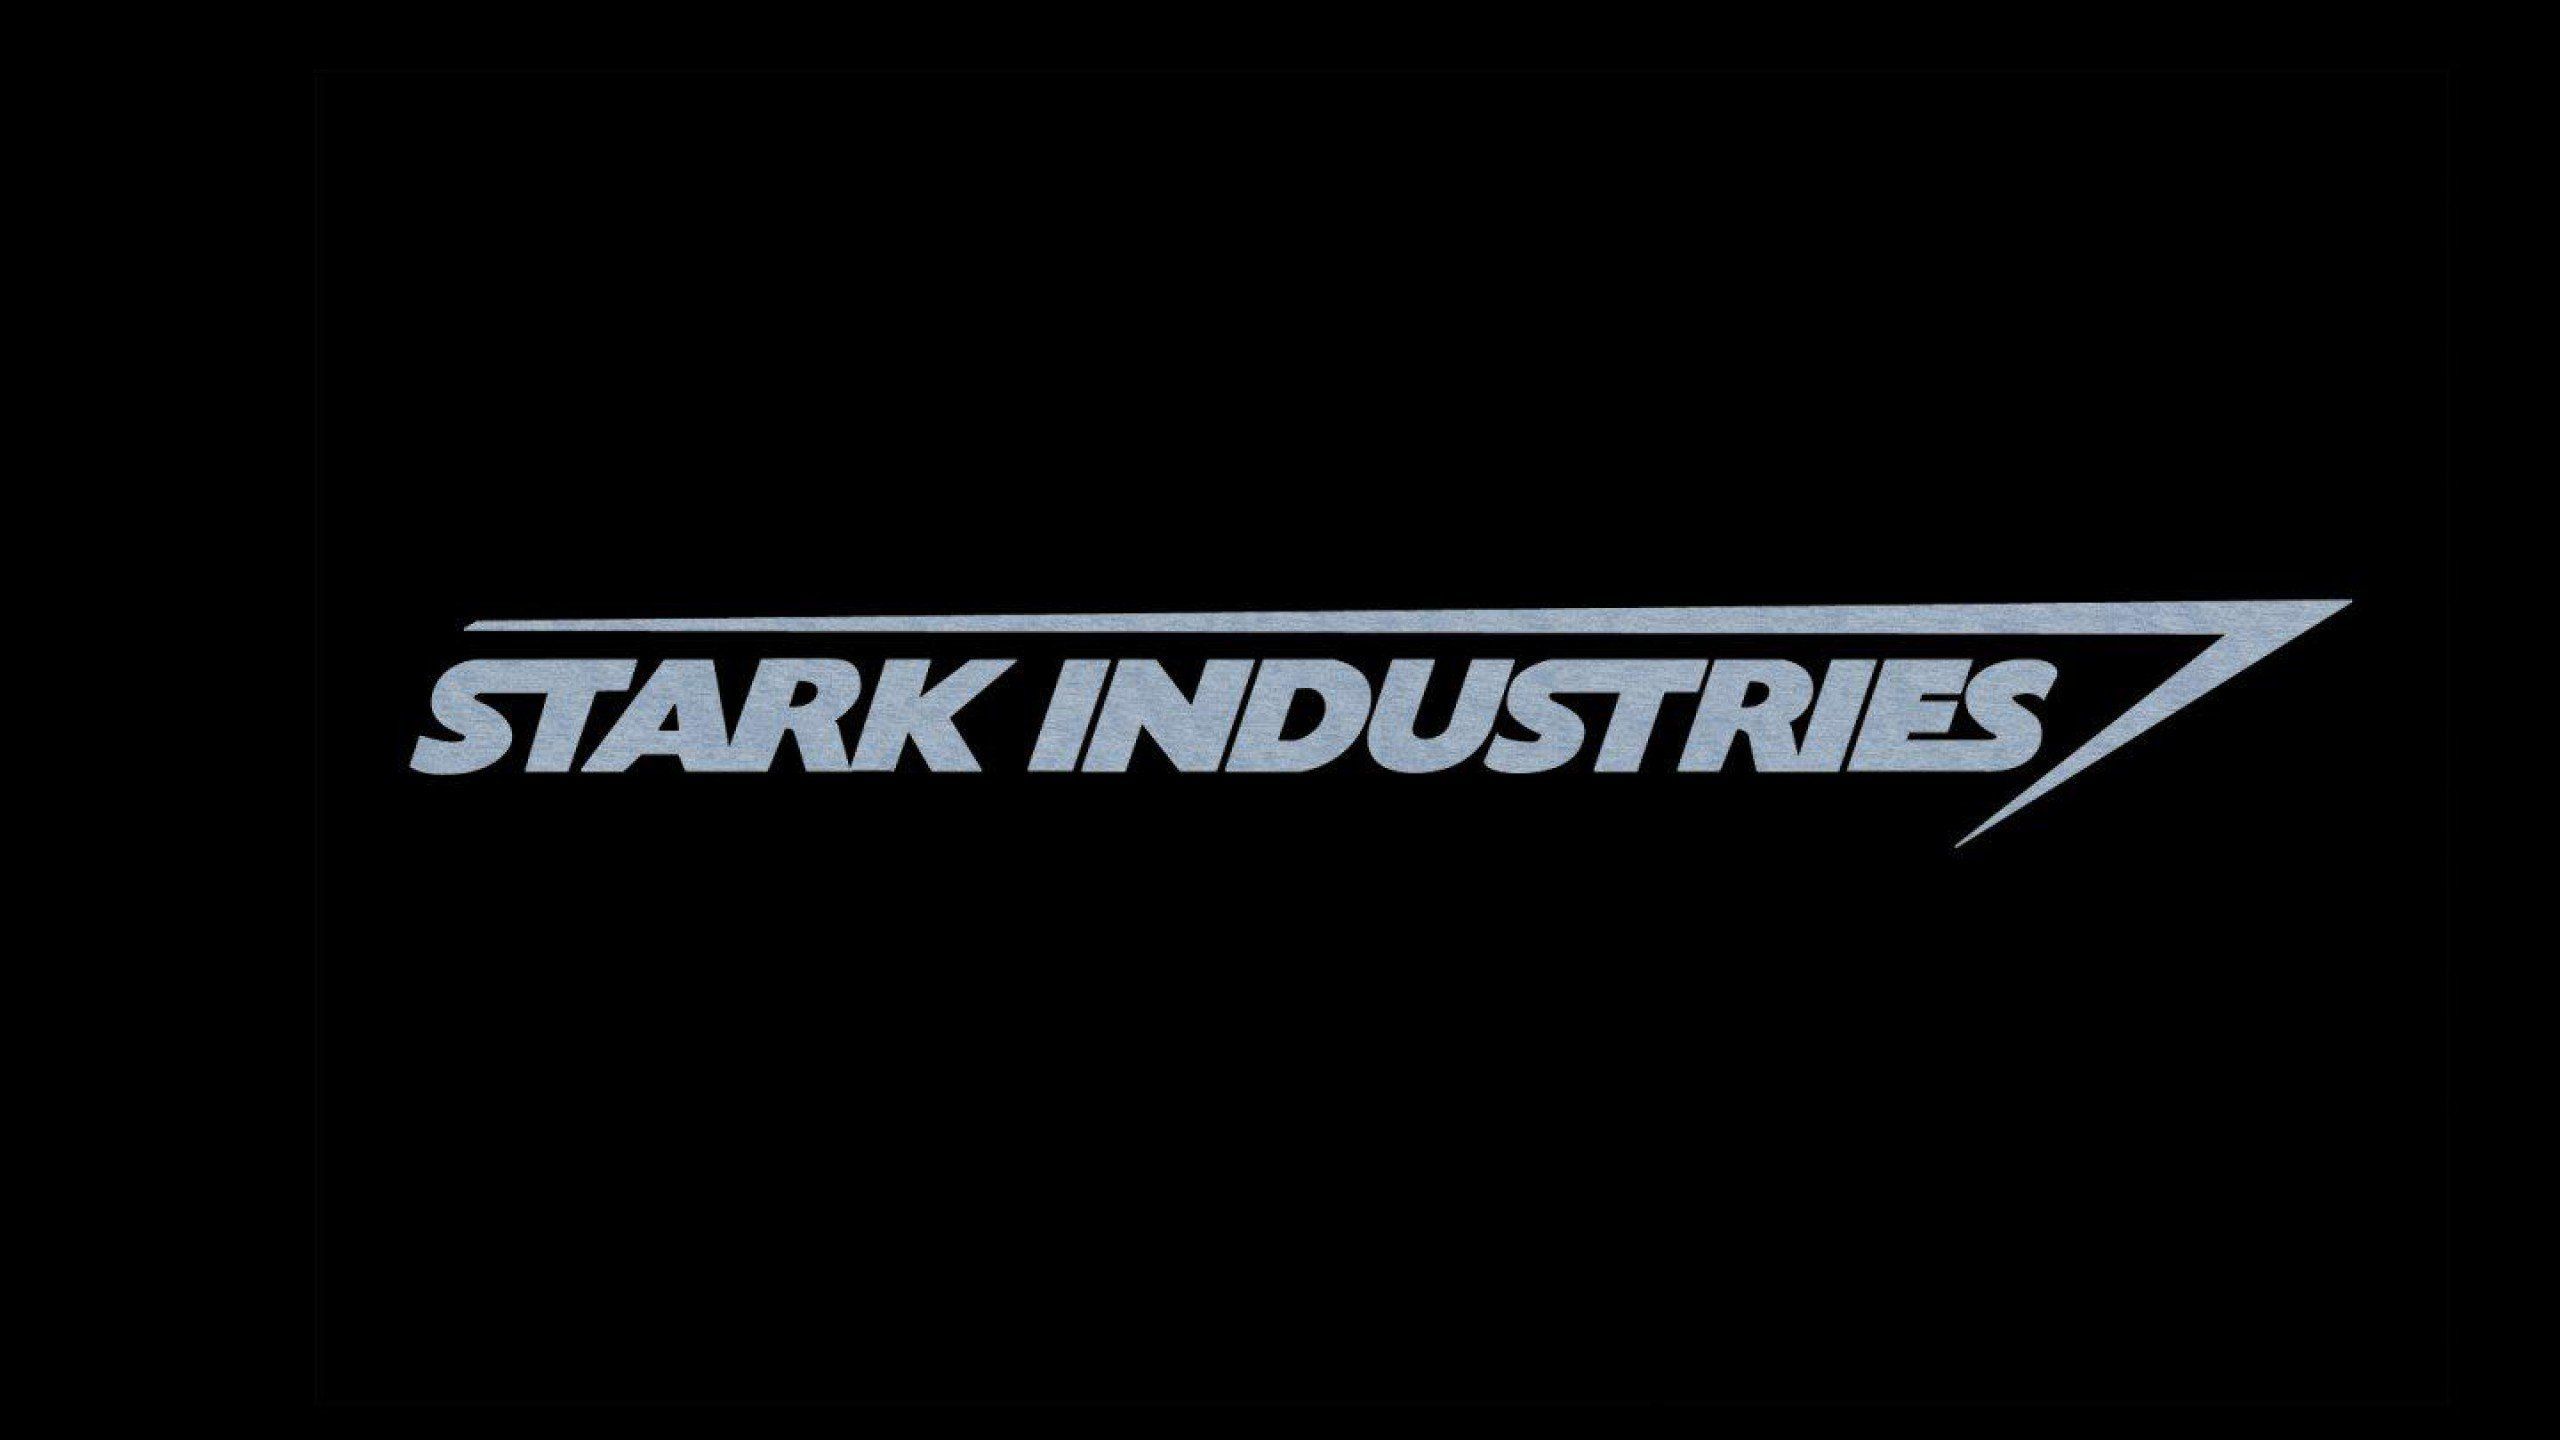 Stark Industries Wallpaper Free Stark Industries Background